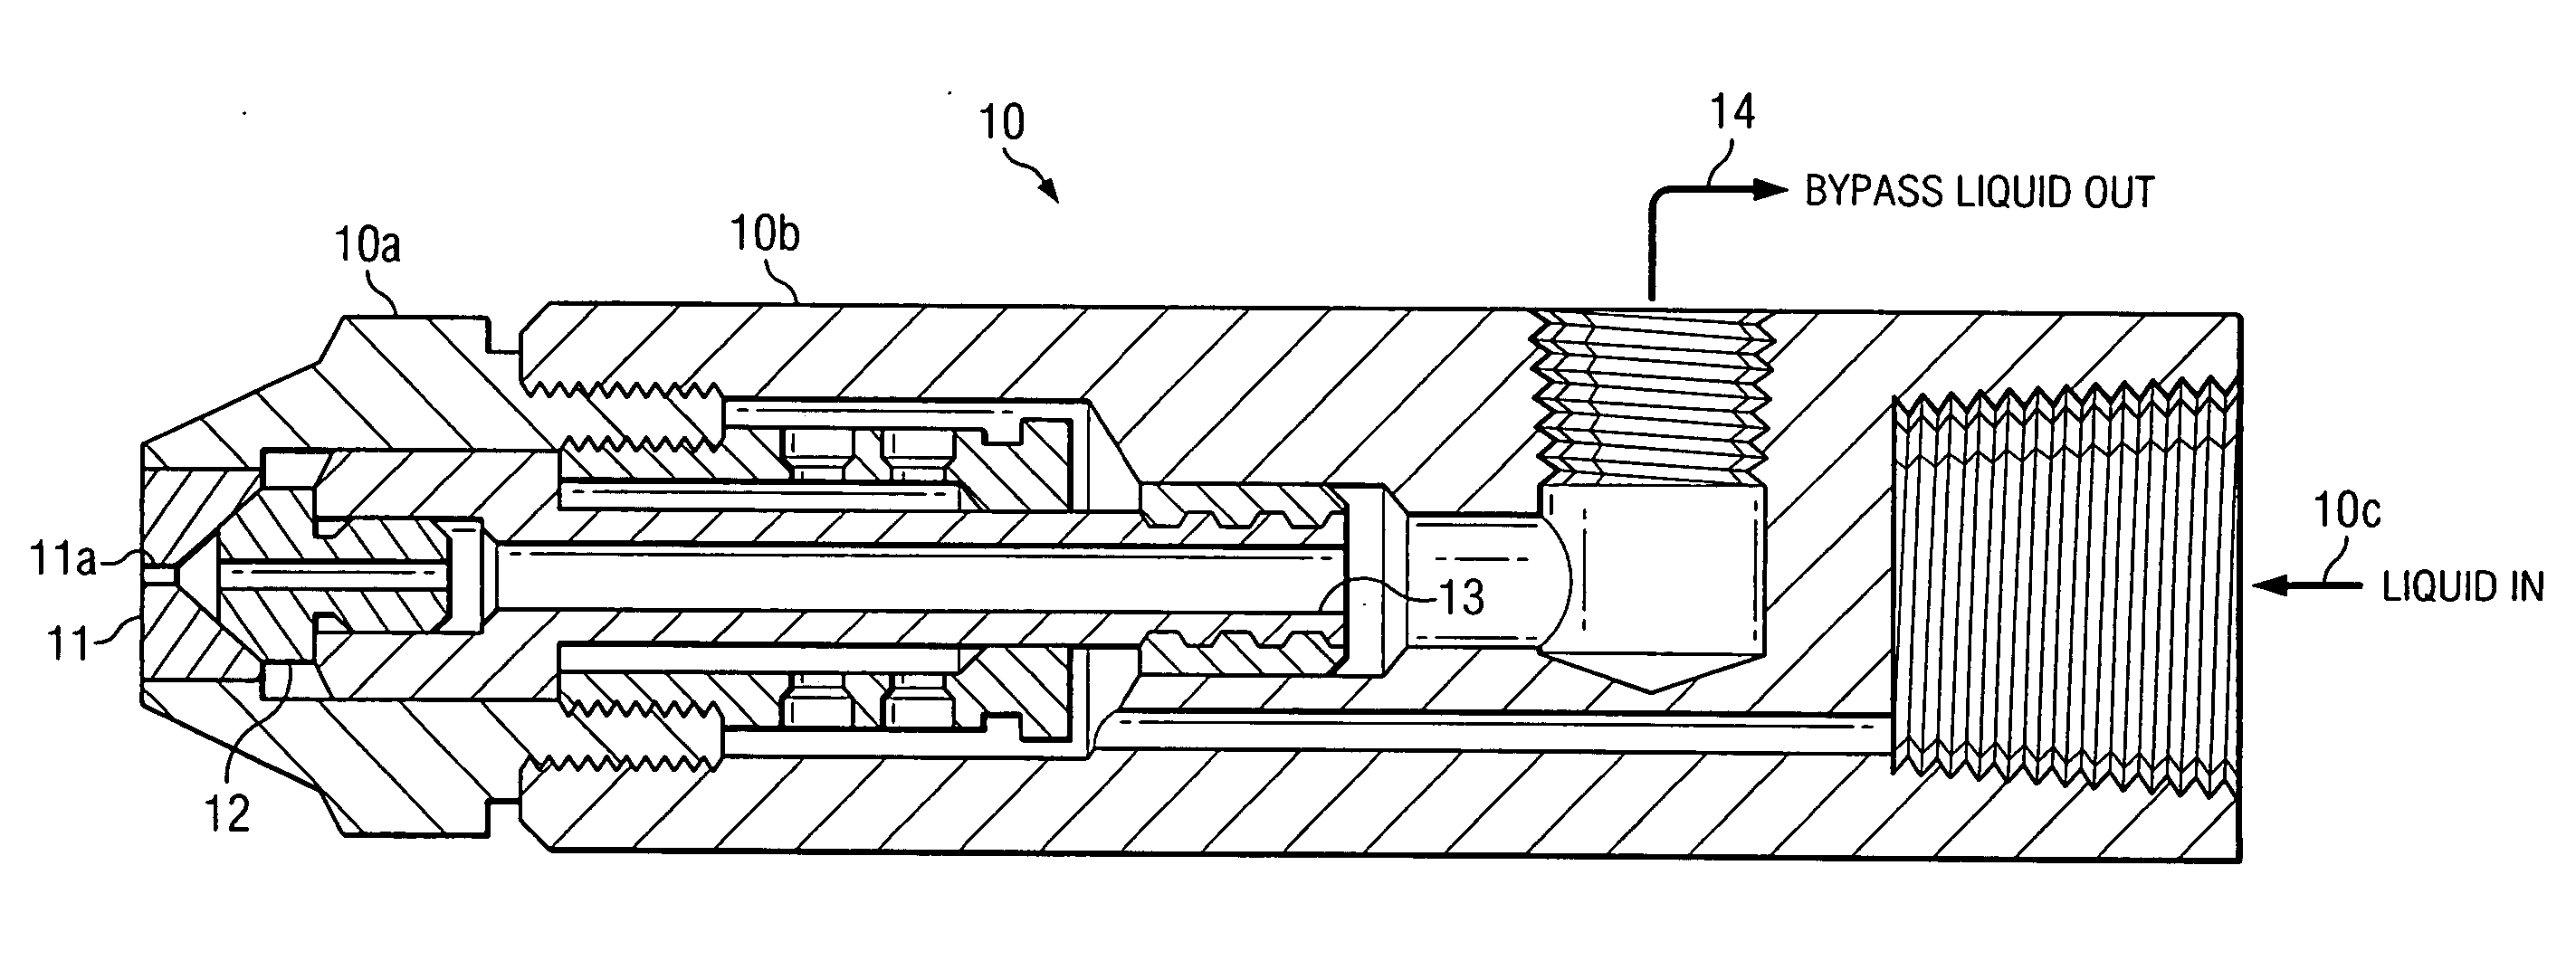 Atomizer cooling by liquid circulation through atomizer tip holder